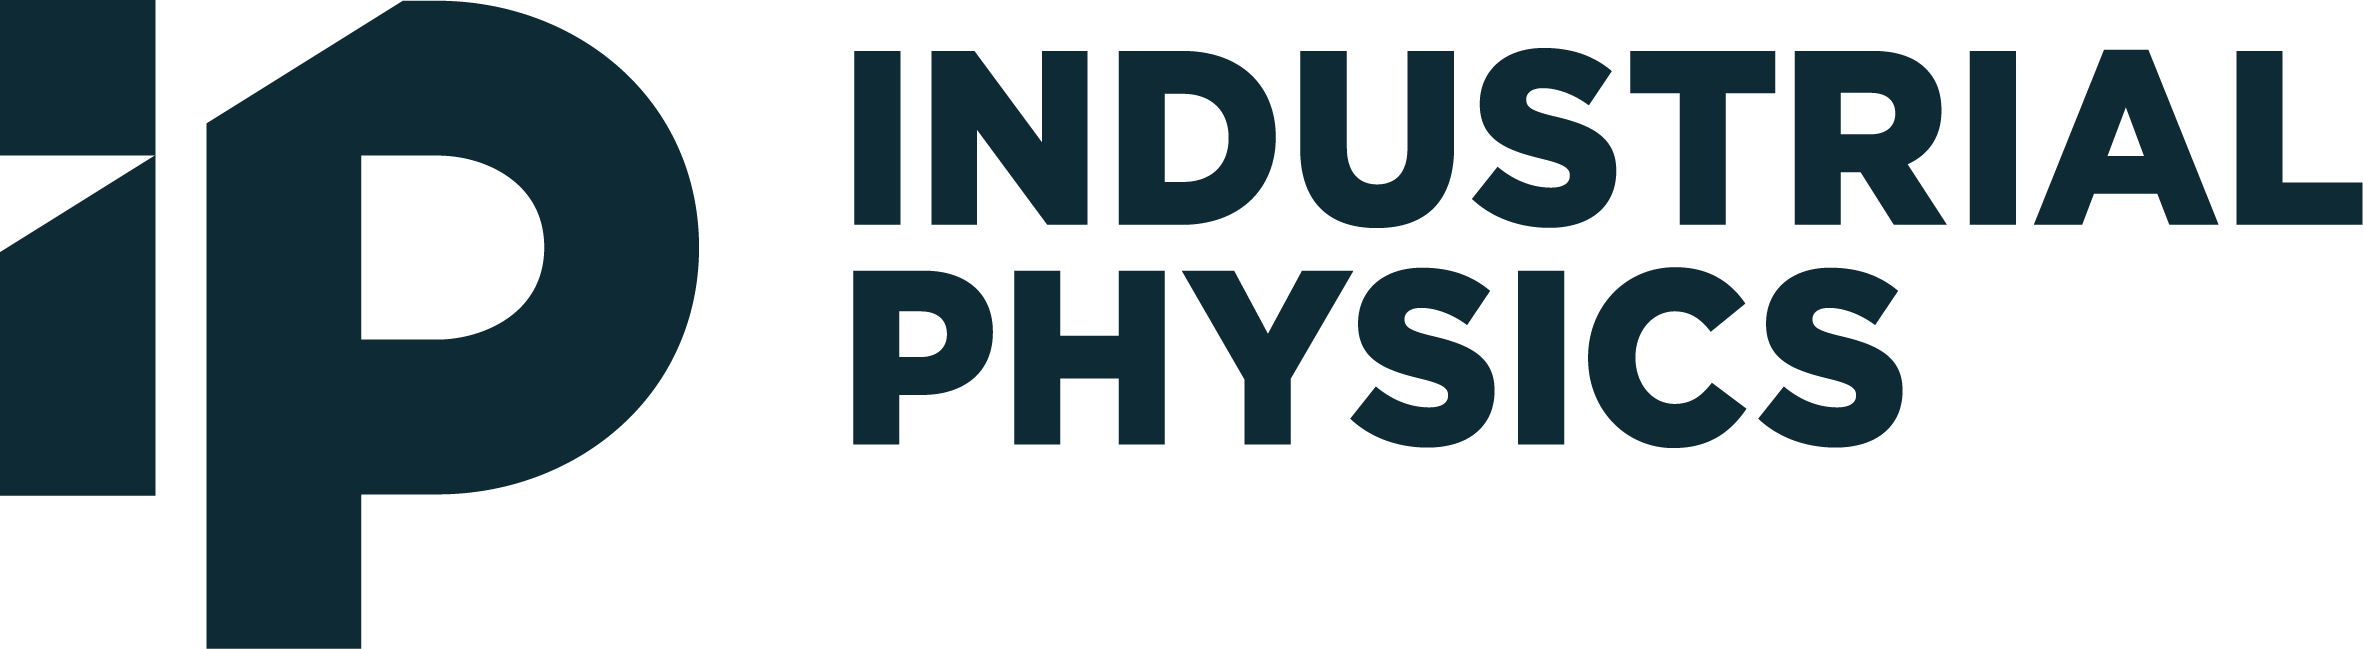 Industrial Physics_logo